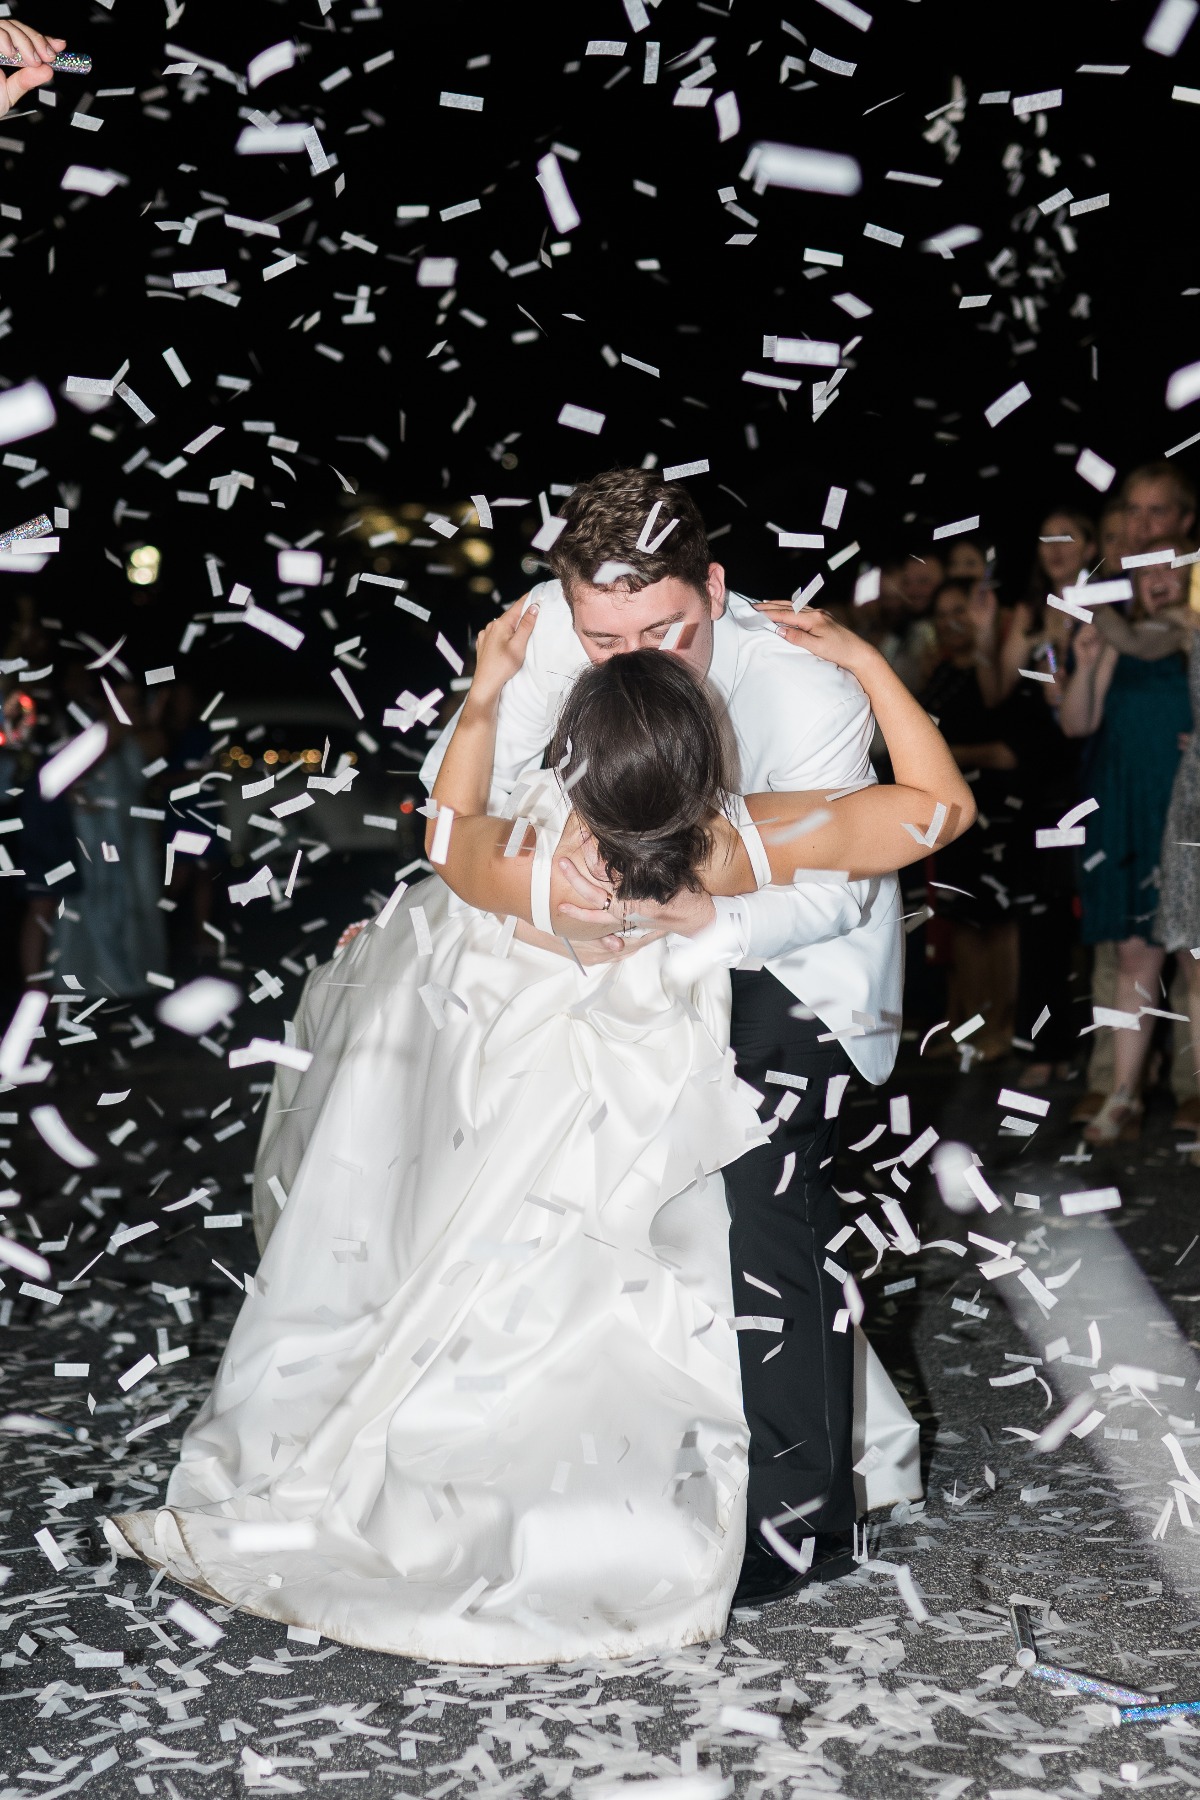 Groom dipping bride at confetti wedding exit 